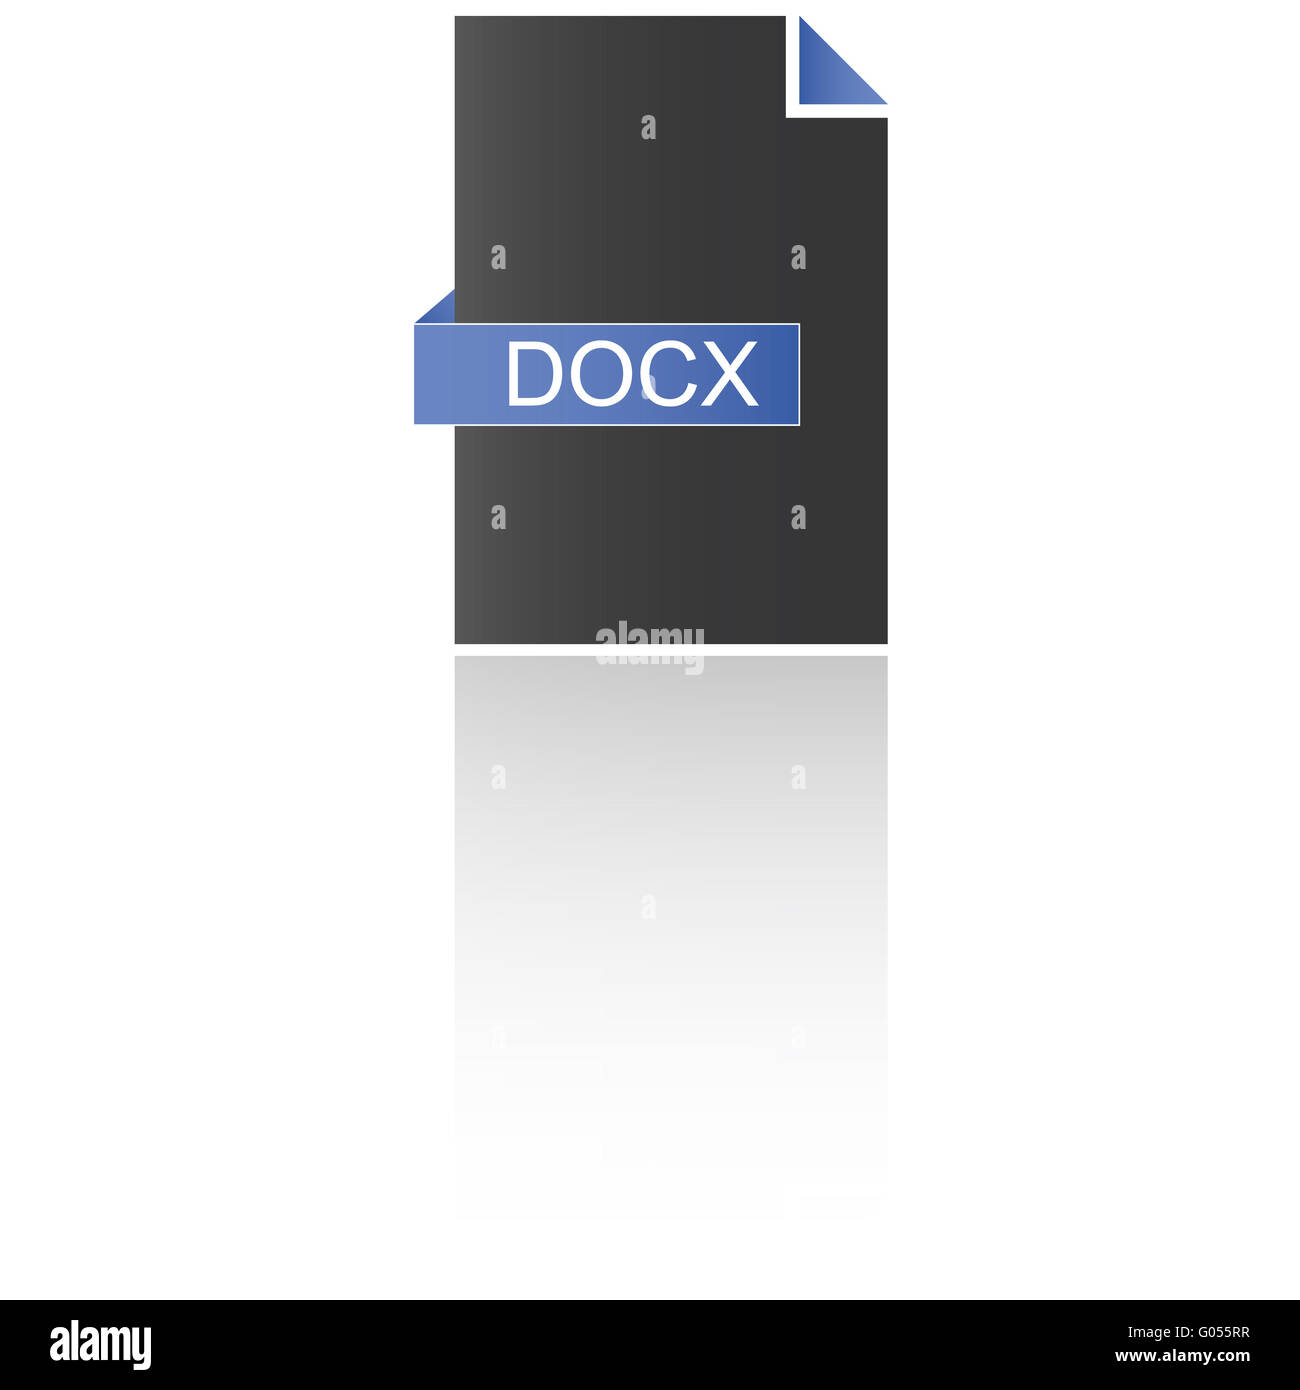 DOCX Data Stock Photo